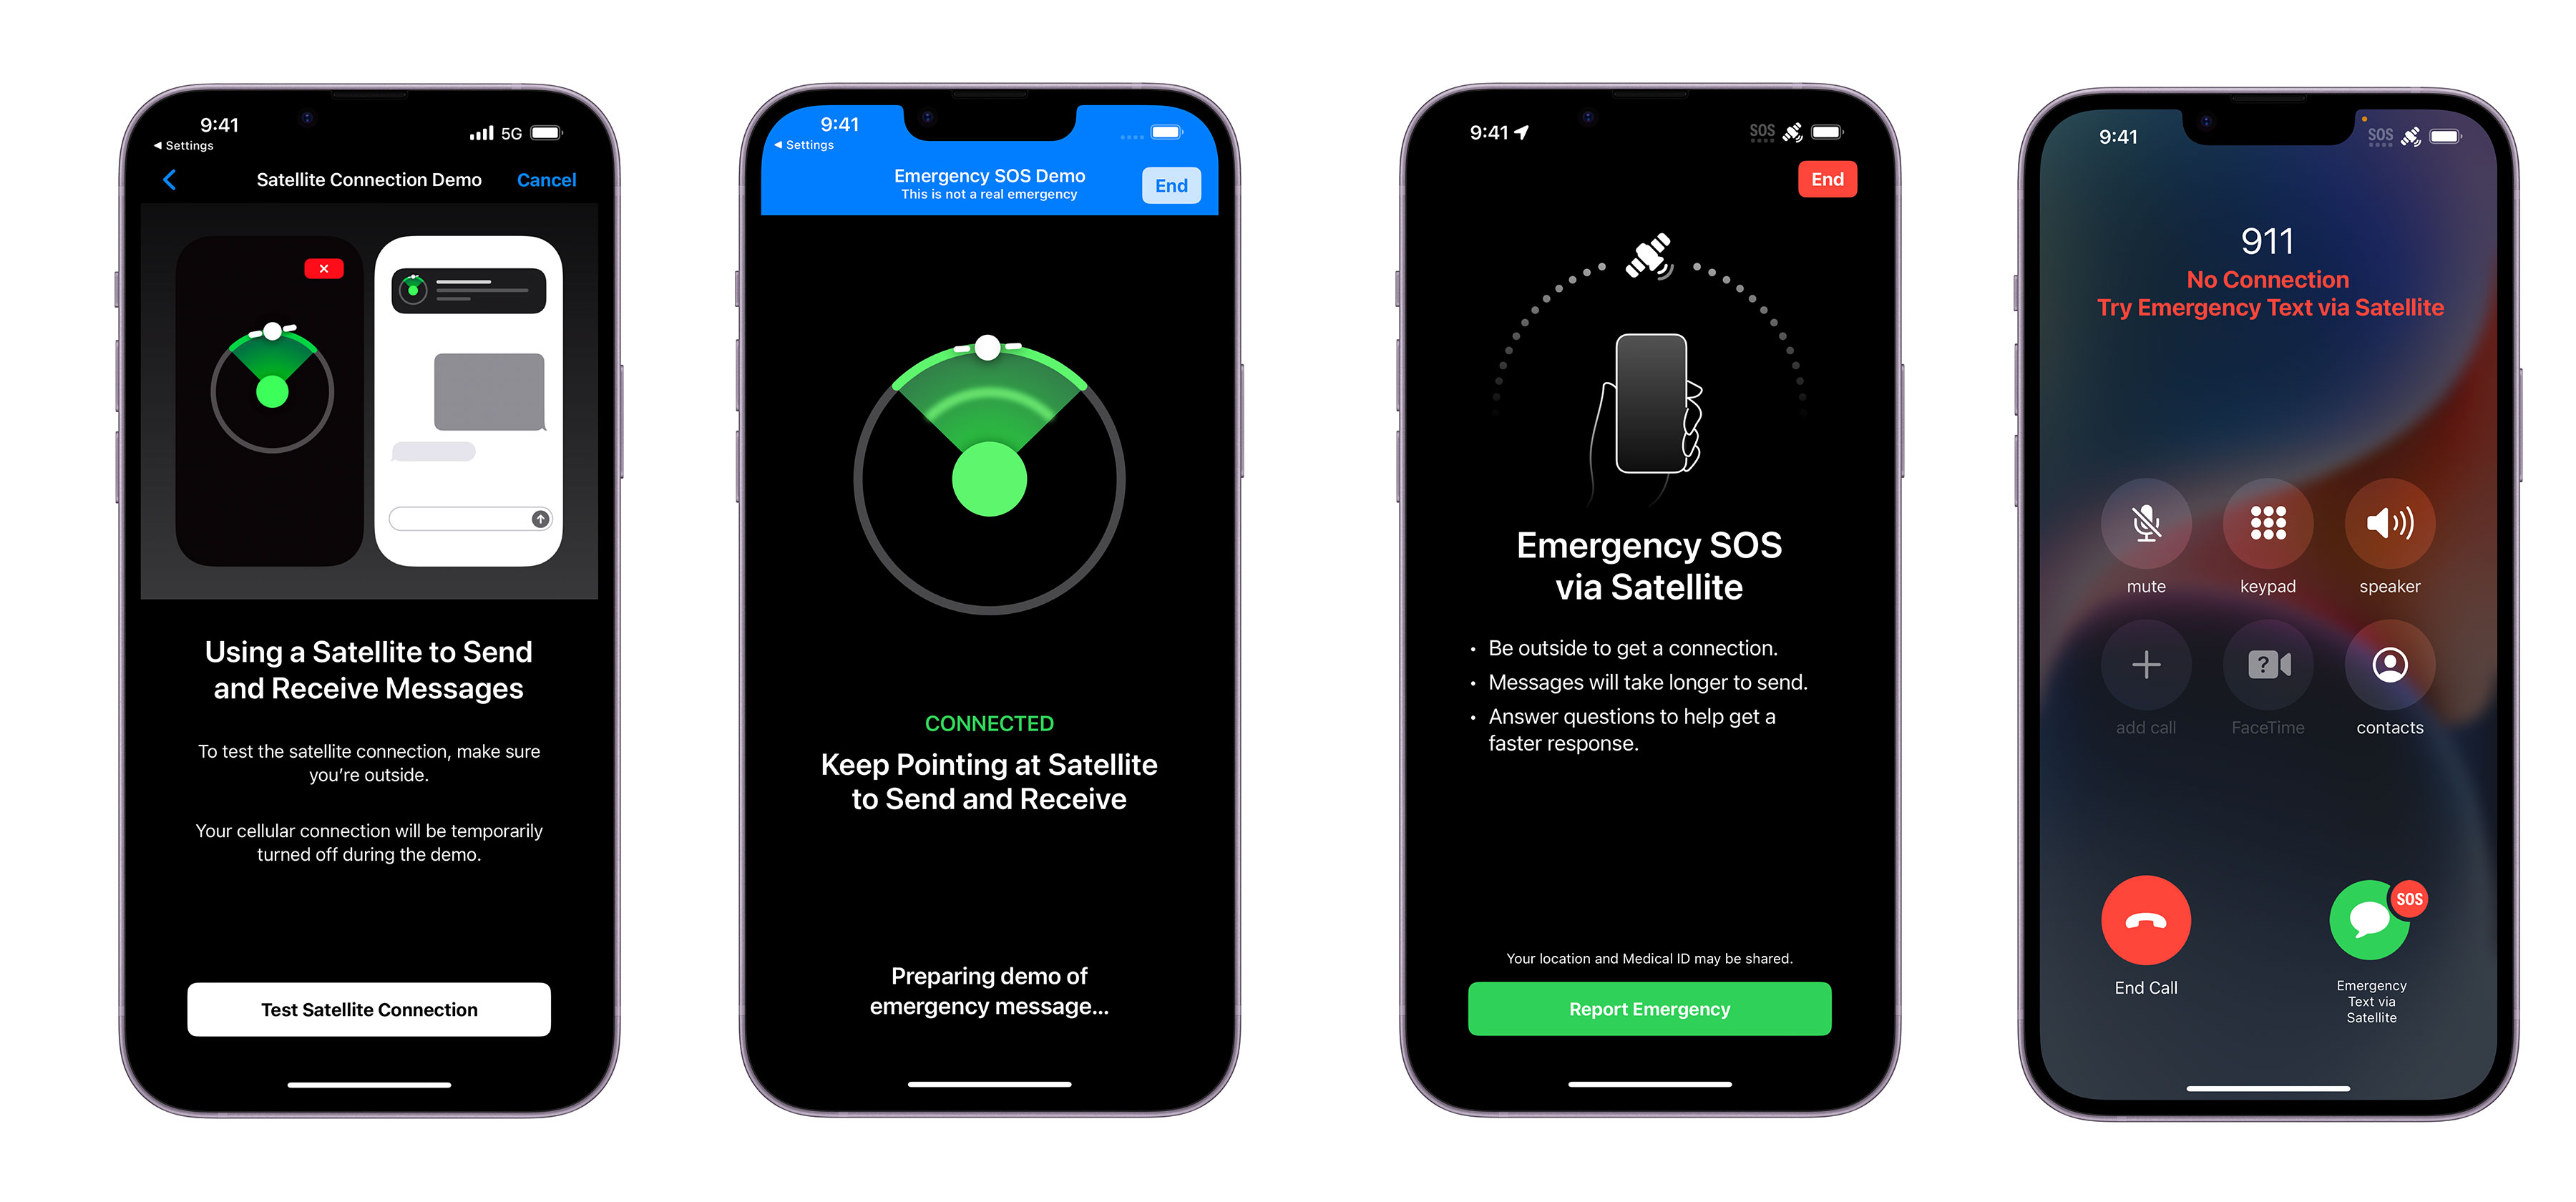 Apple lets you practice sending emergency SOS texts via satellite in new demo mode